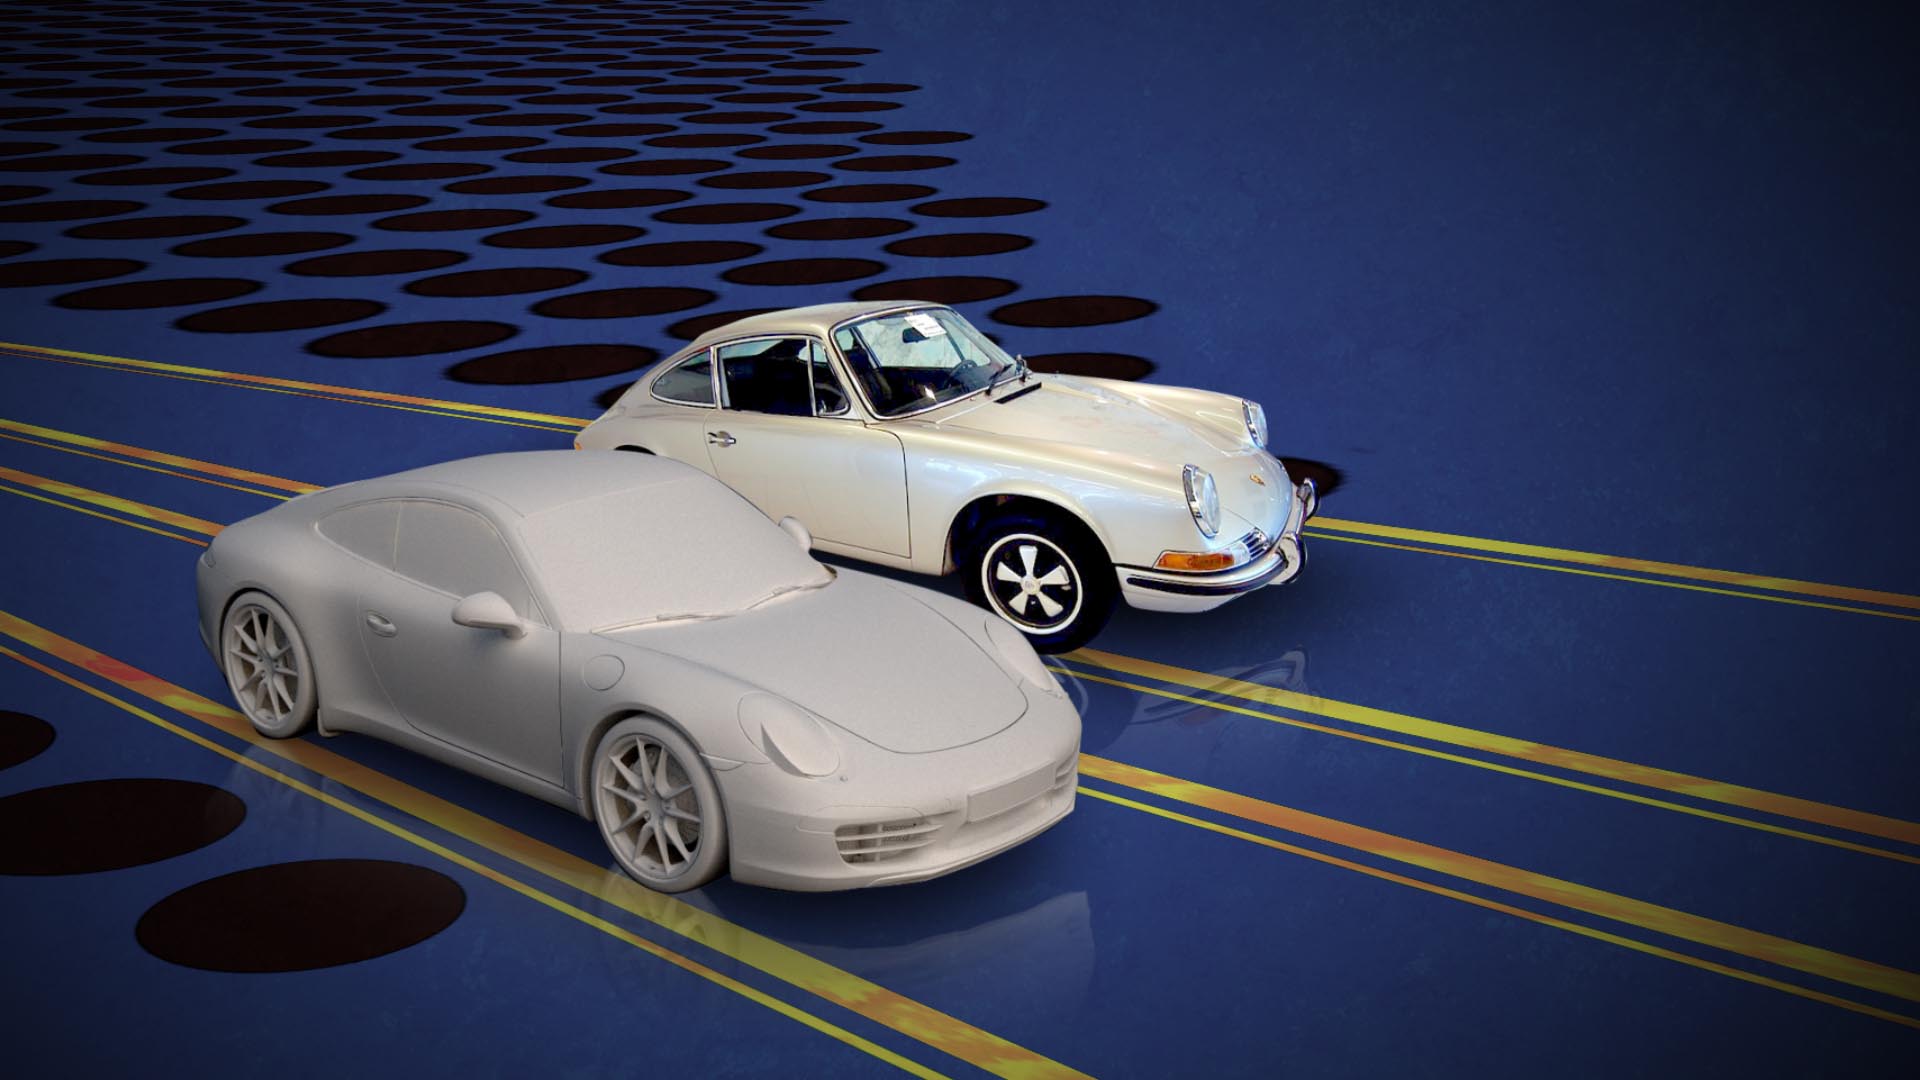 A 3D model of a Porsche next to a real Porsche from the 60's